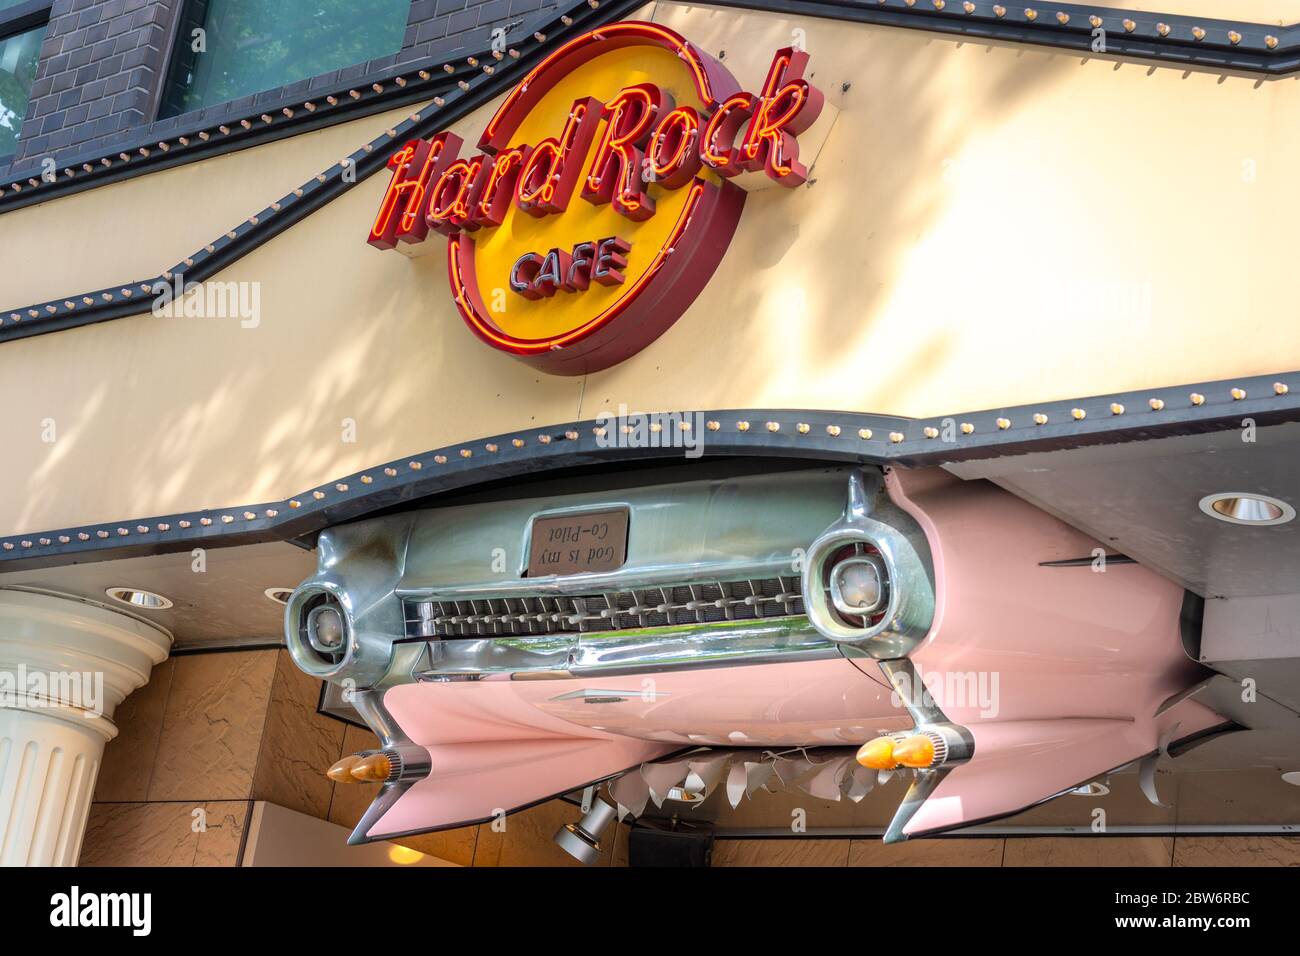 Hard Rock Cafe Osaka Universal - Live Music and Dining in Osaka, Japan